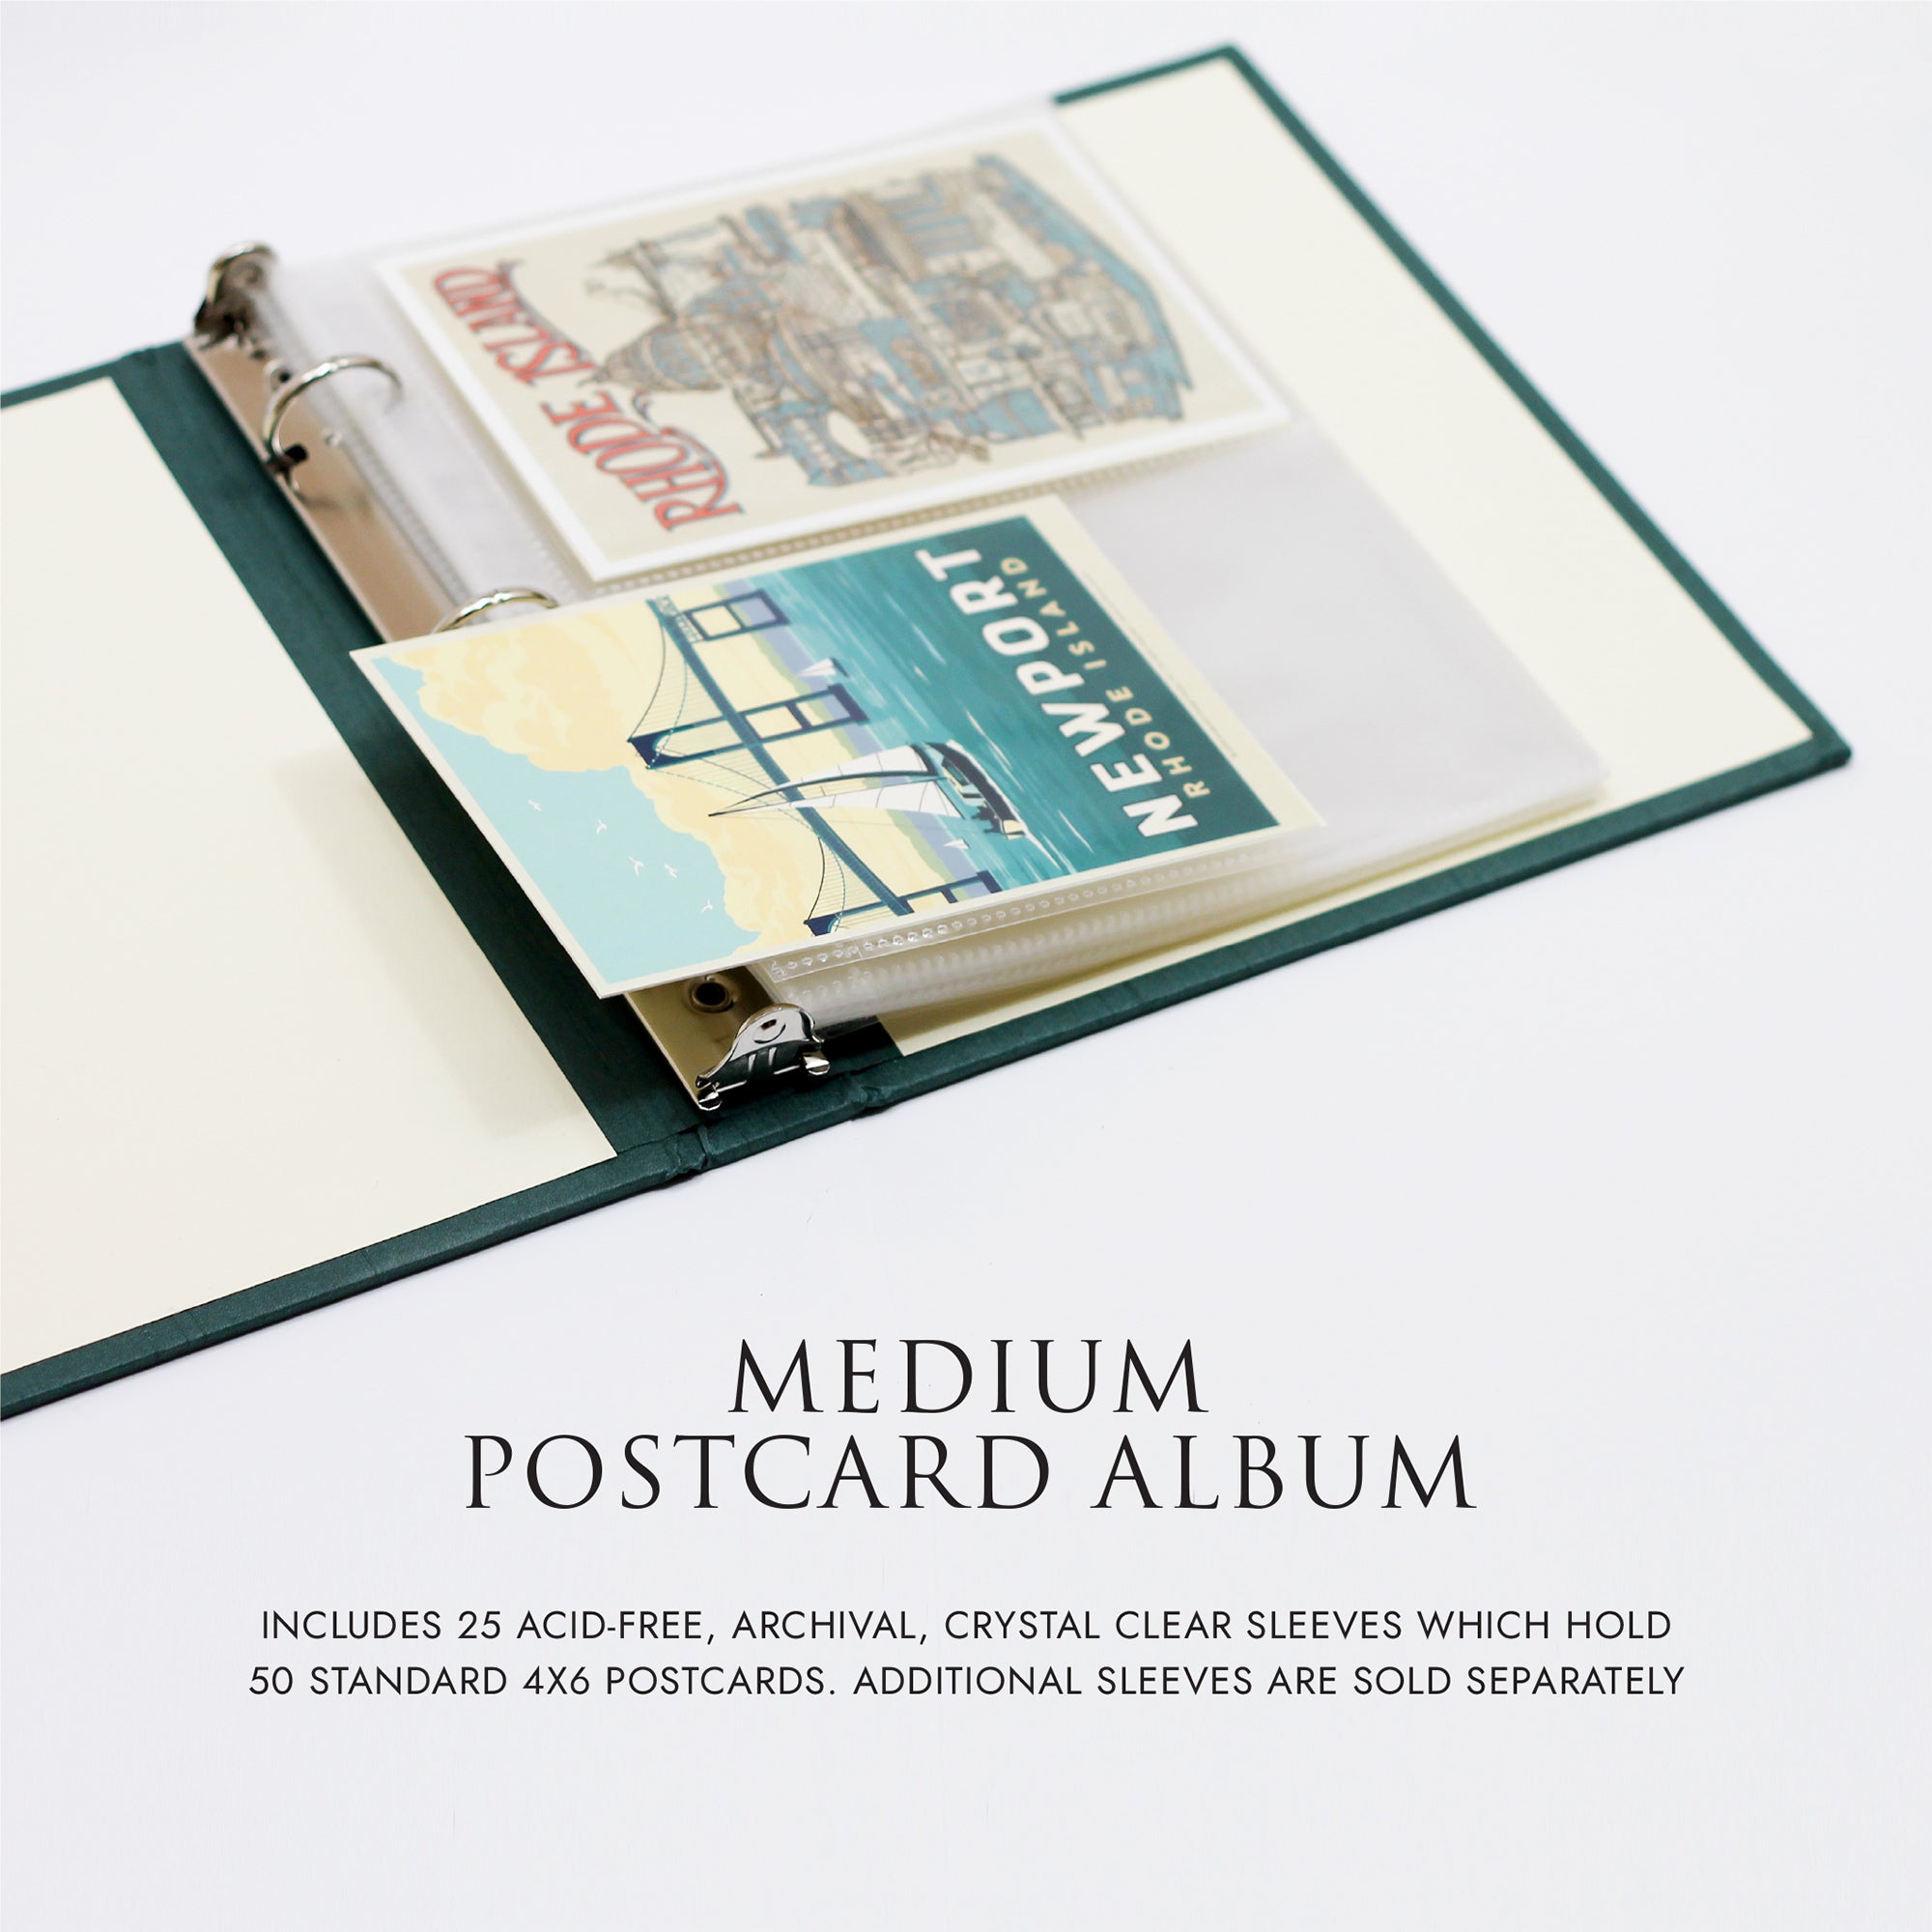  Home-X - Postcard Album, Multi-Paged Album with